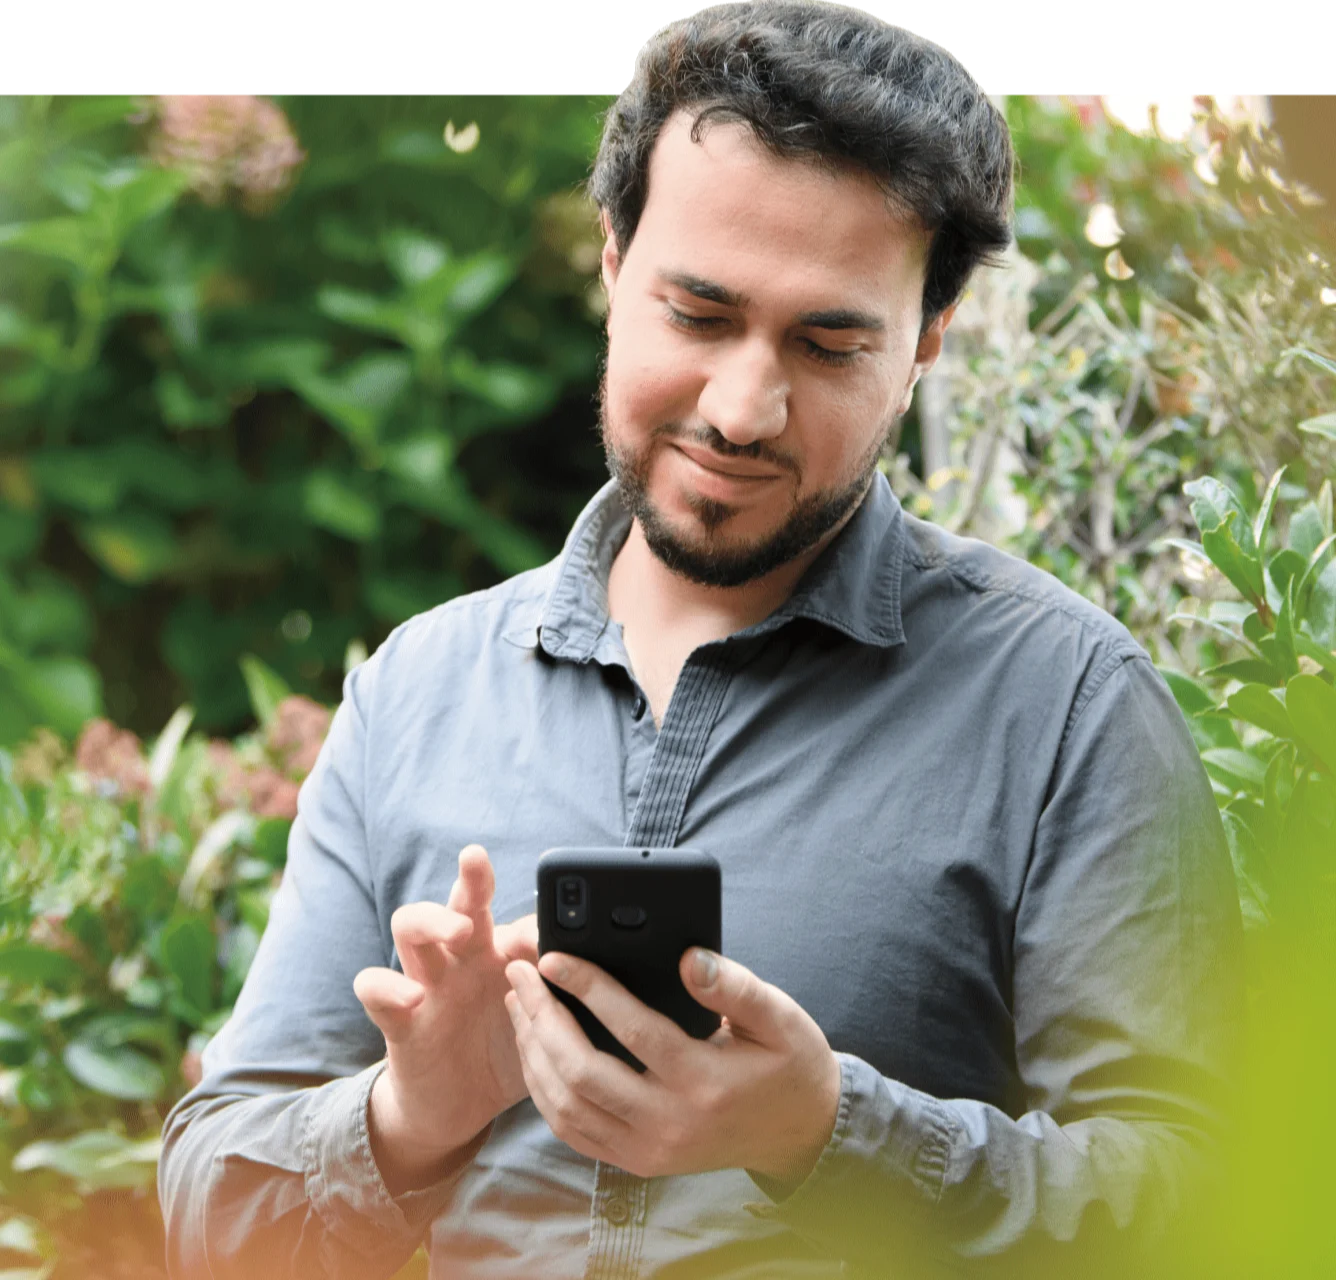 A man in a garden viewing a smartphone